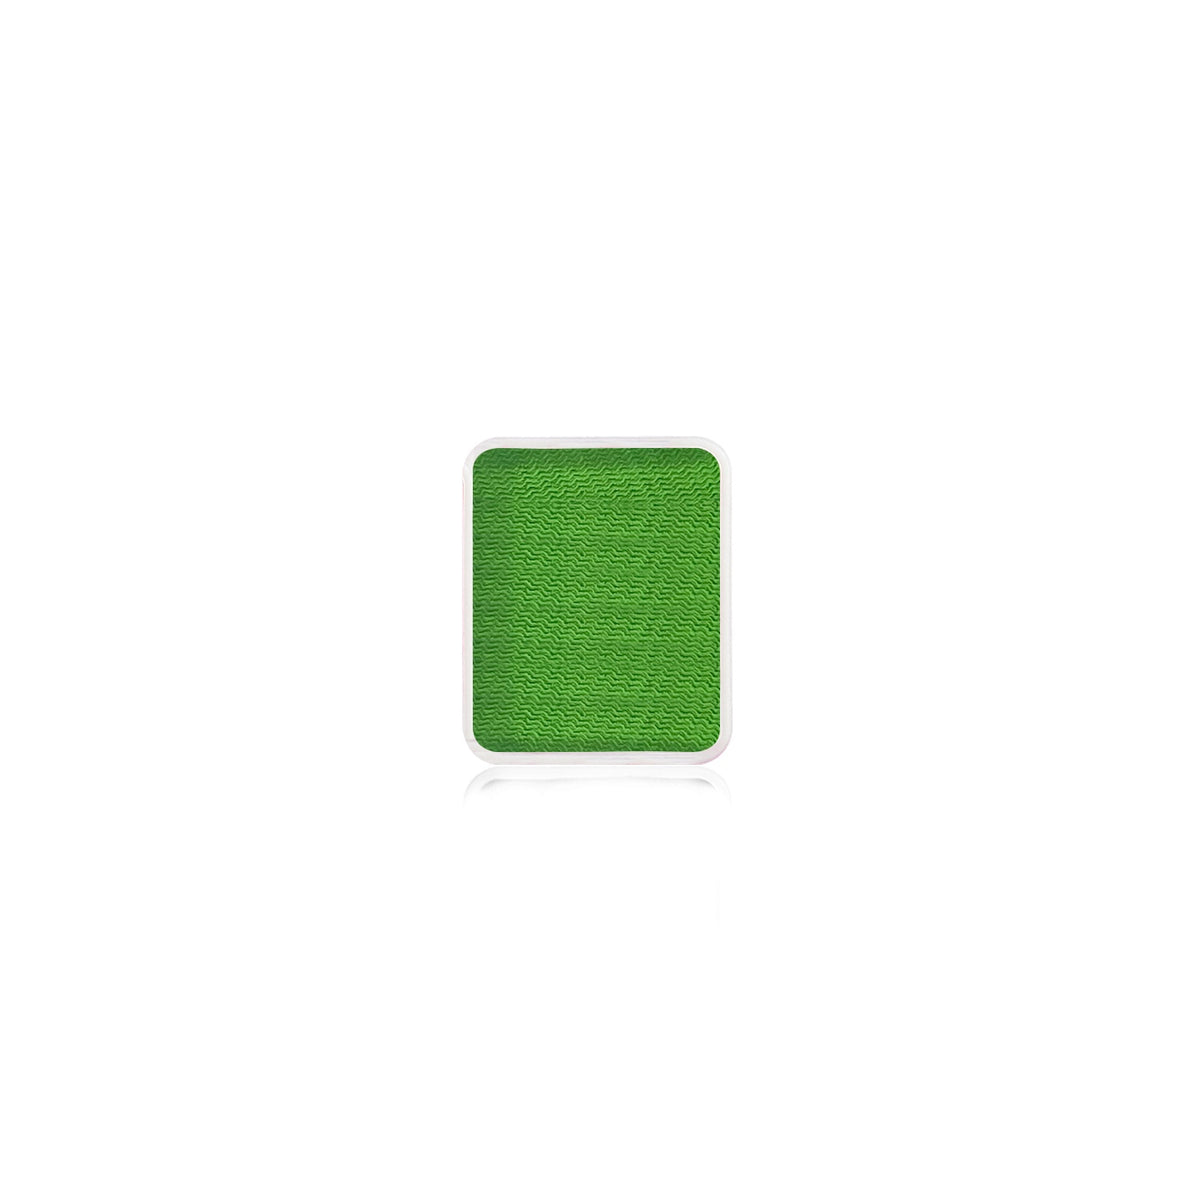 Kraze FX Face Paint Palette Refill - Lime Green (0.21 oz/6 gm)